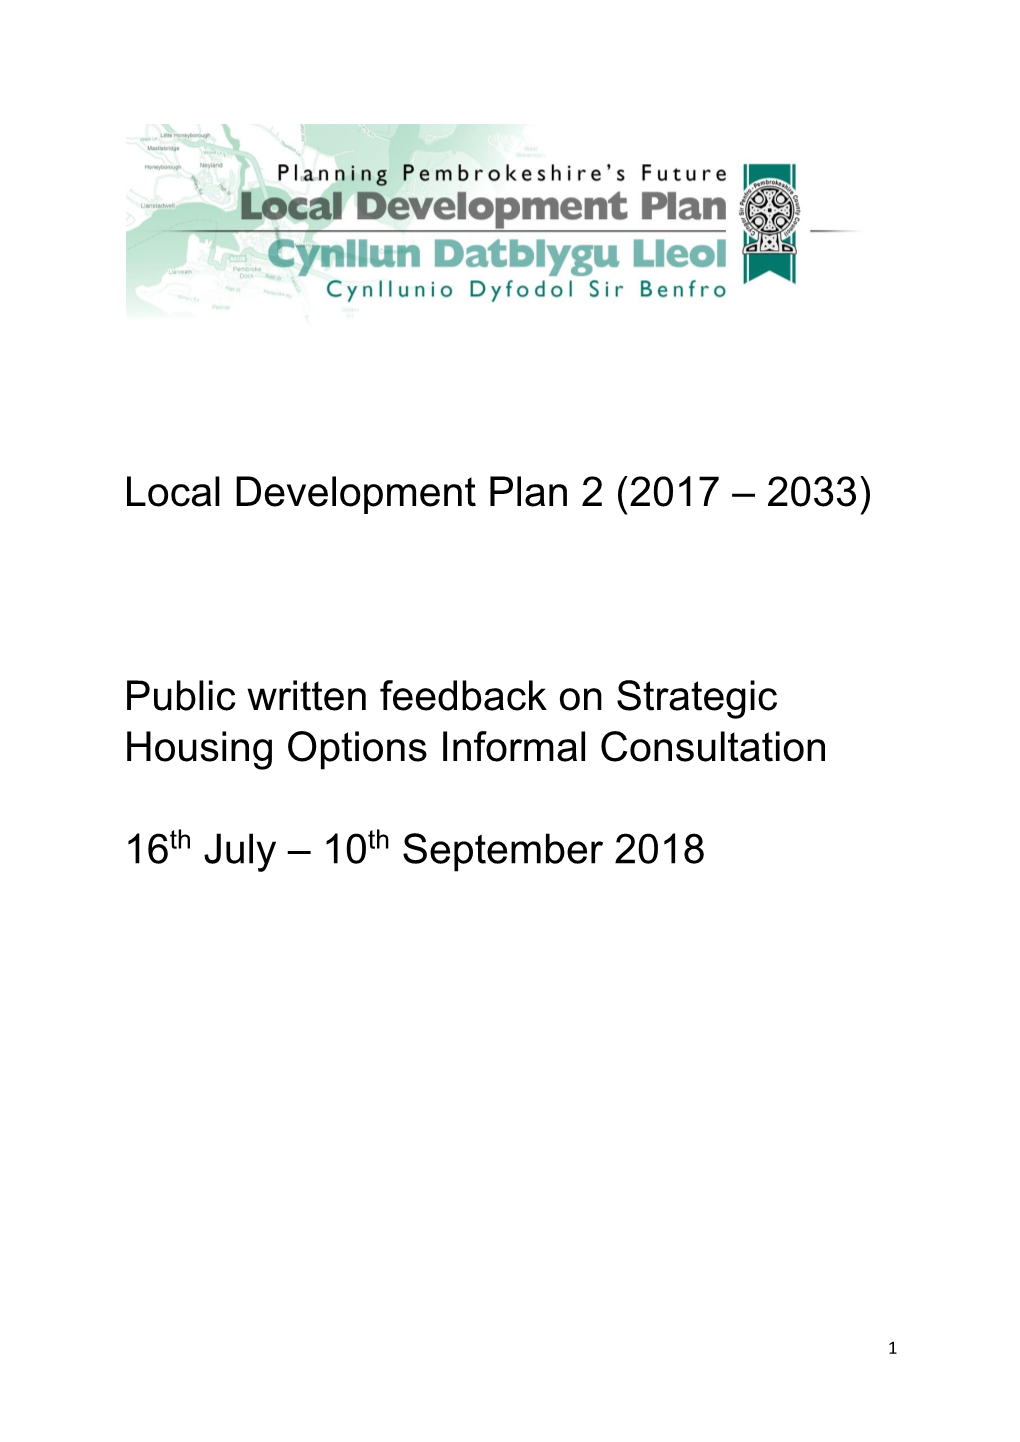 Public Written Feedback on Strategic Housing Options Informal Consultation